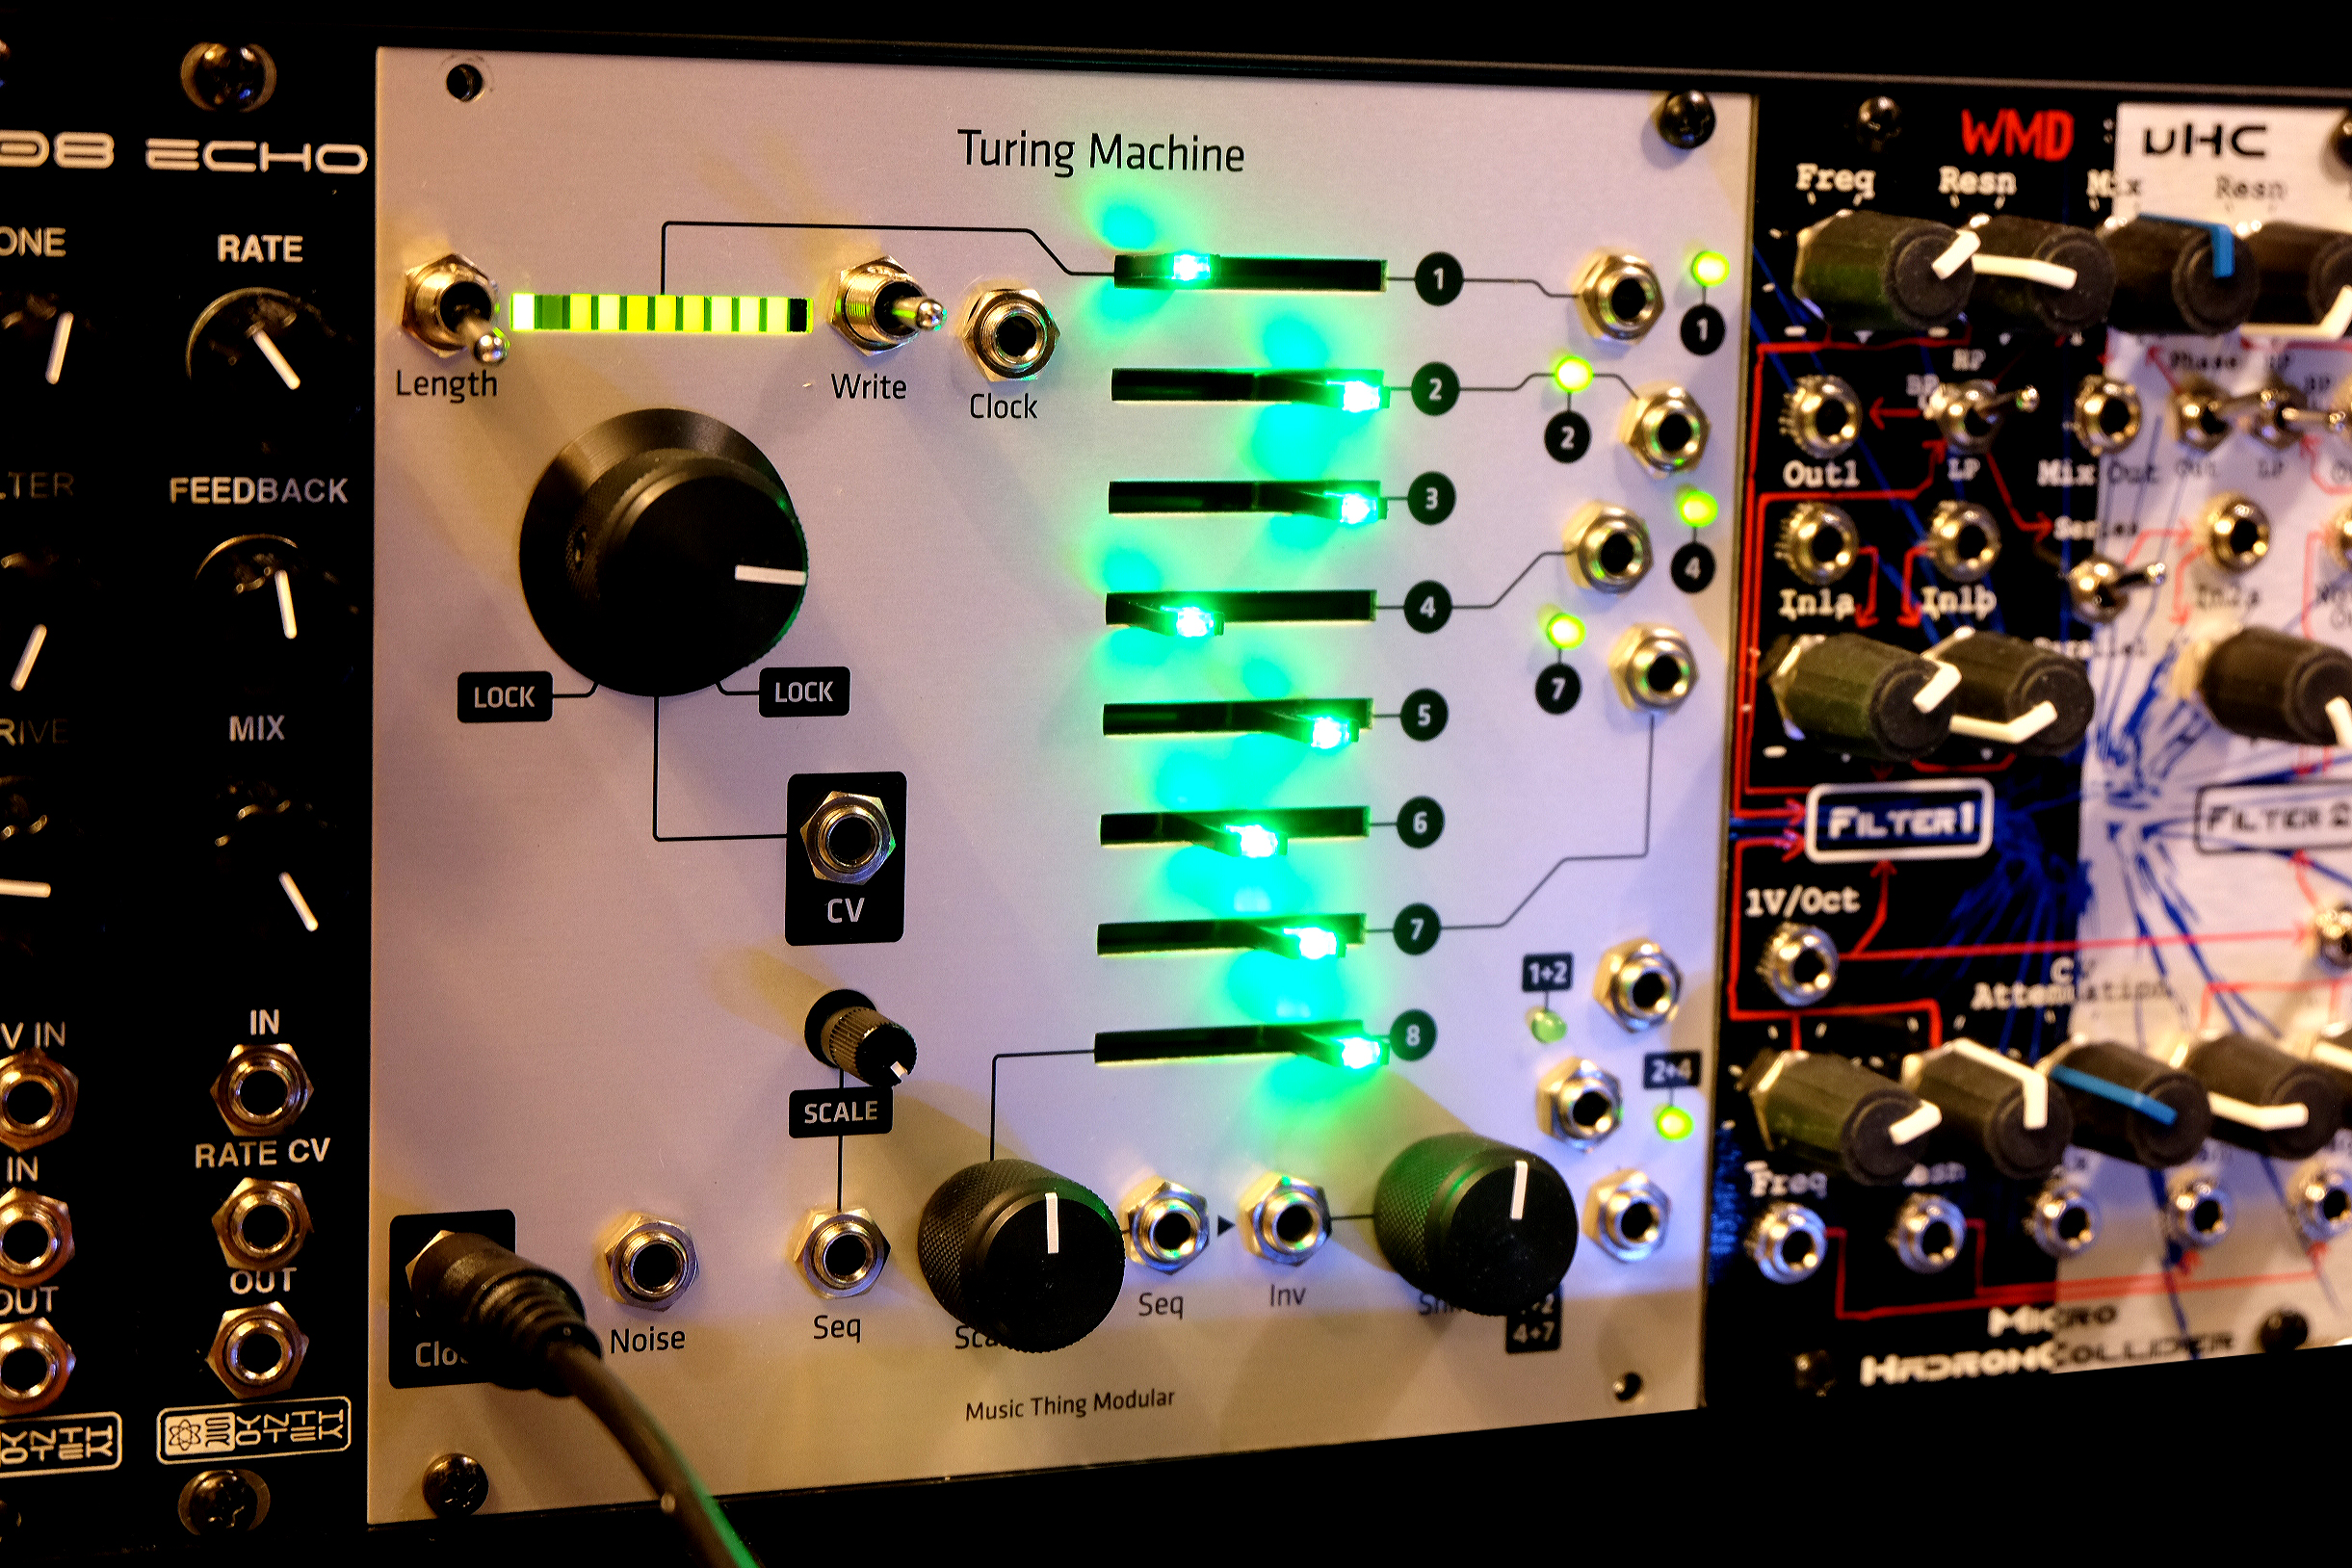 Music Thing Modular Turing Machine Quick Start Manual Guide - Tips on